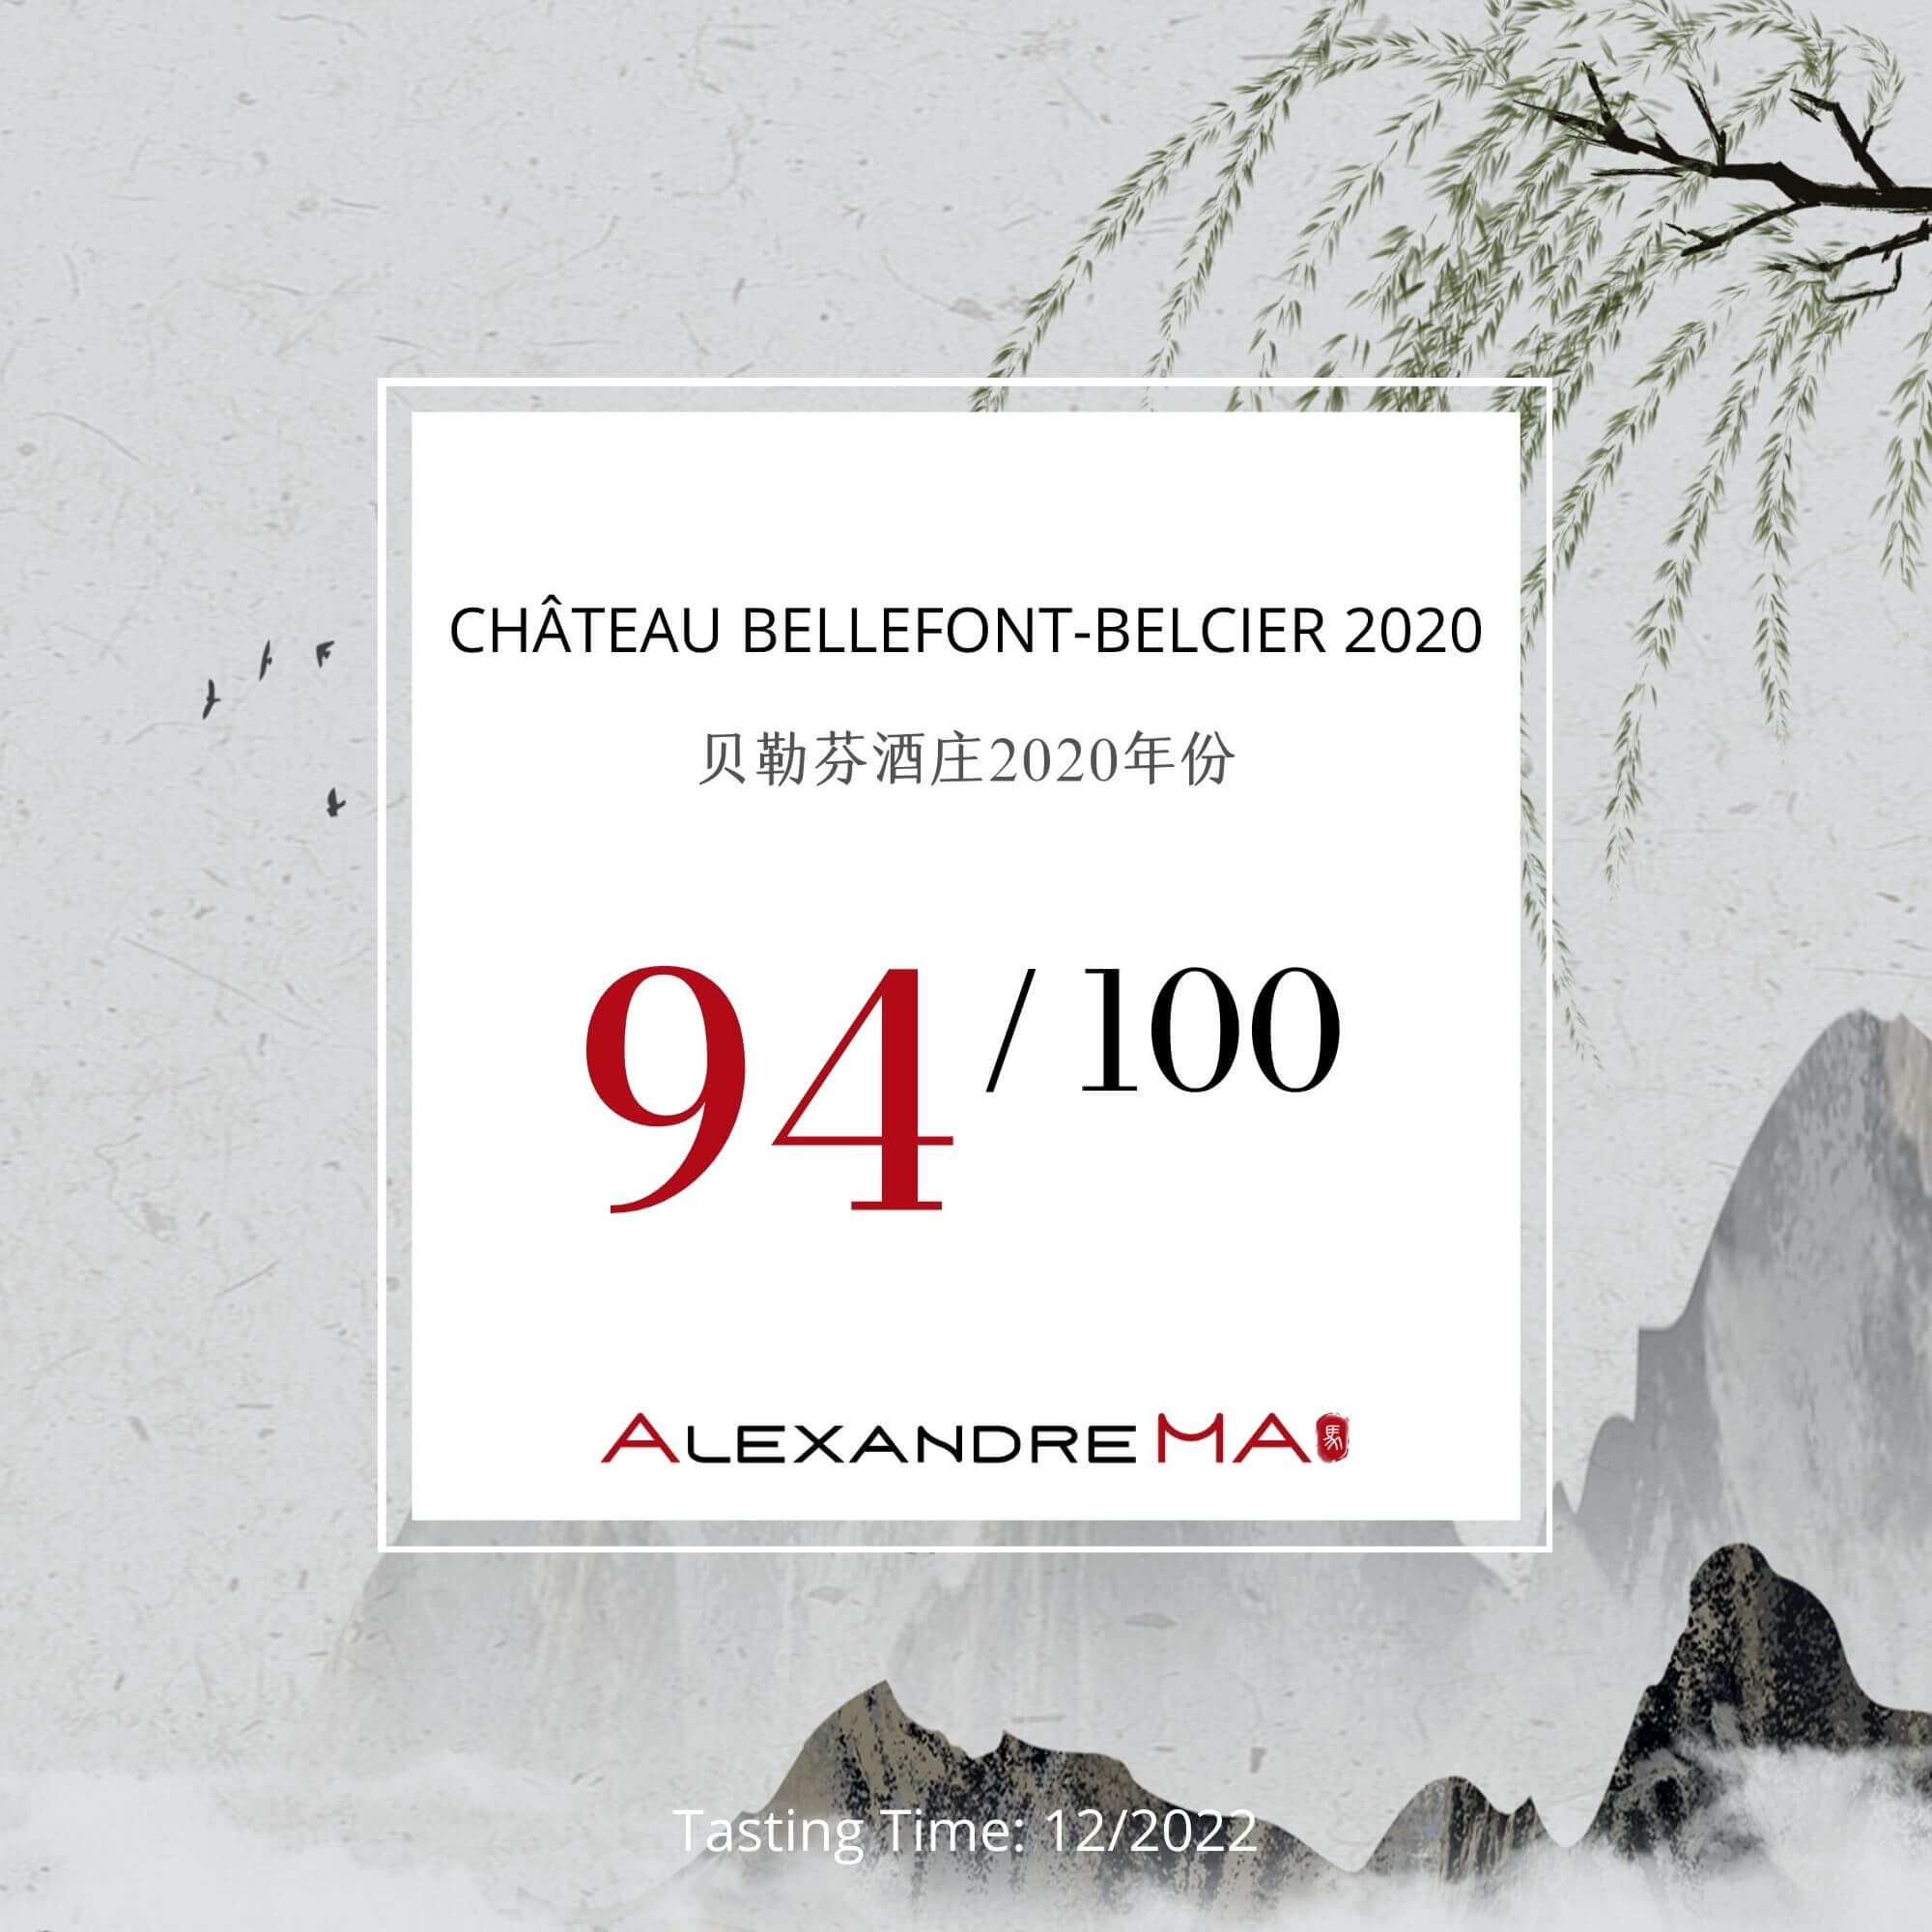 Château Bellefont-Belcier 2020 - Alexandre MA